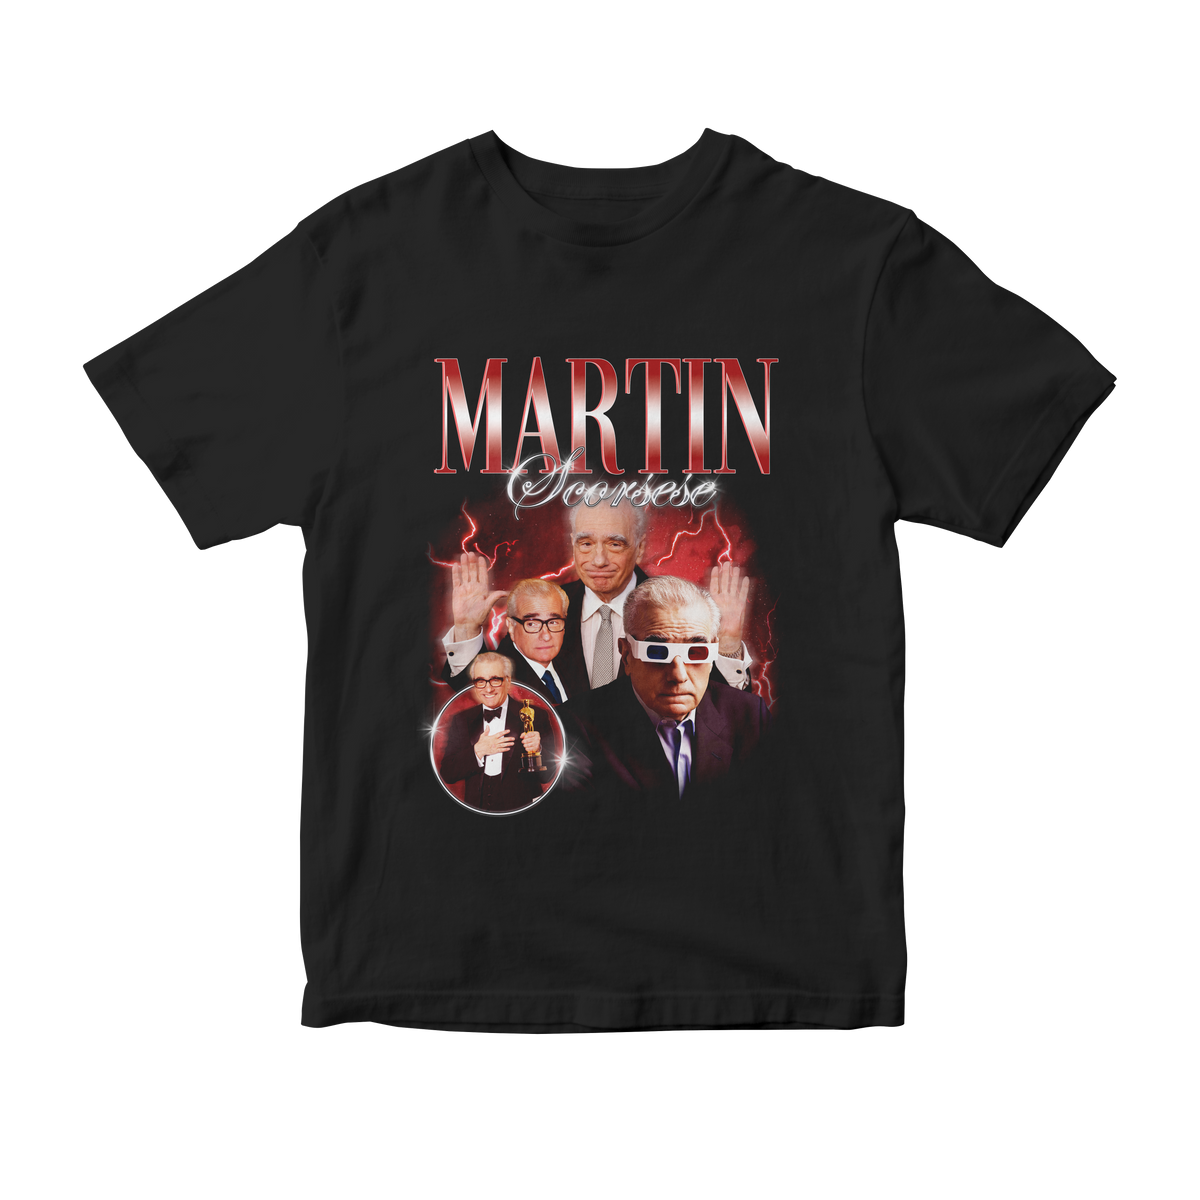 Nome do produto: Camiseta Martin Scorsese